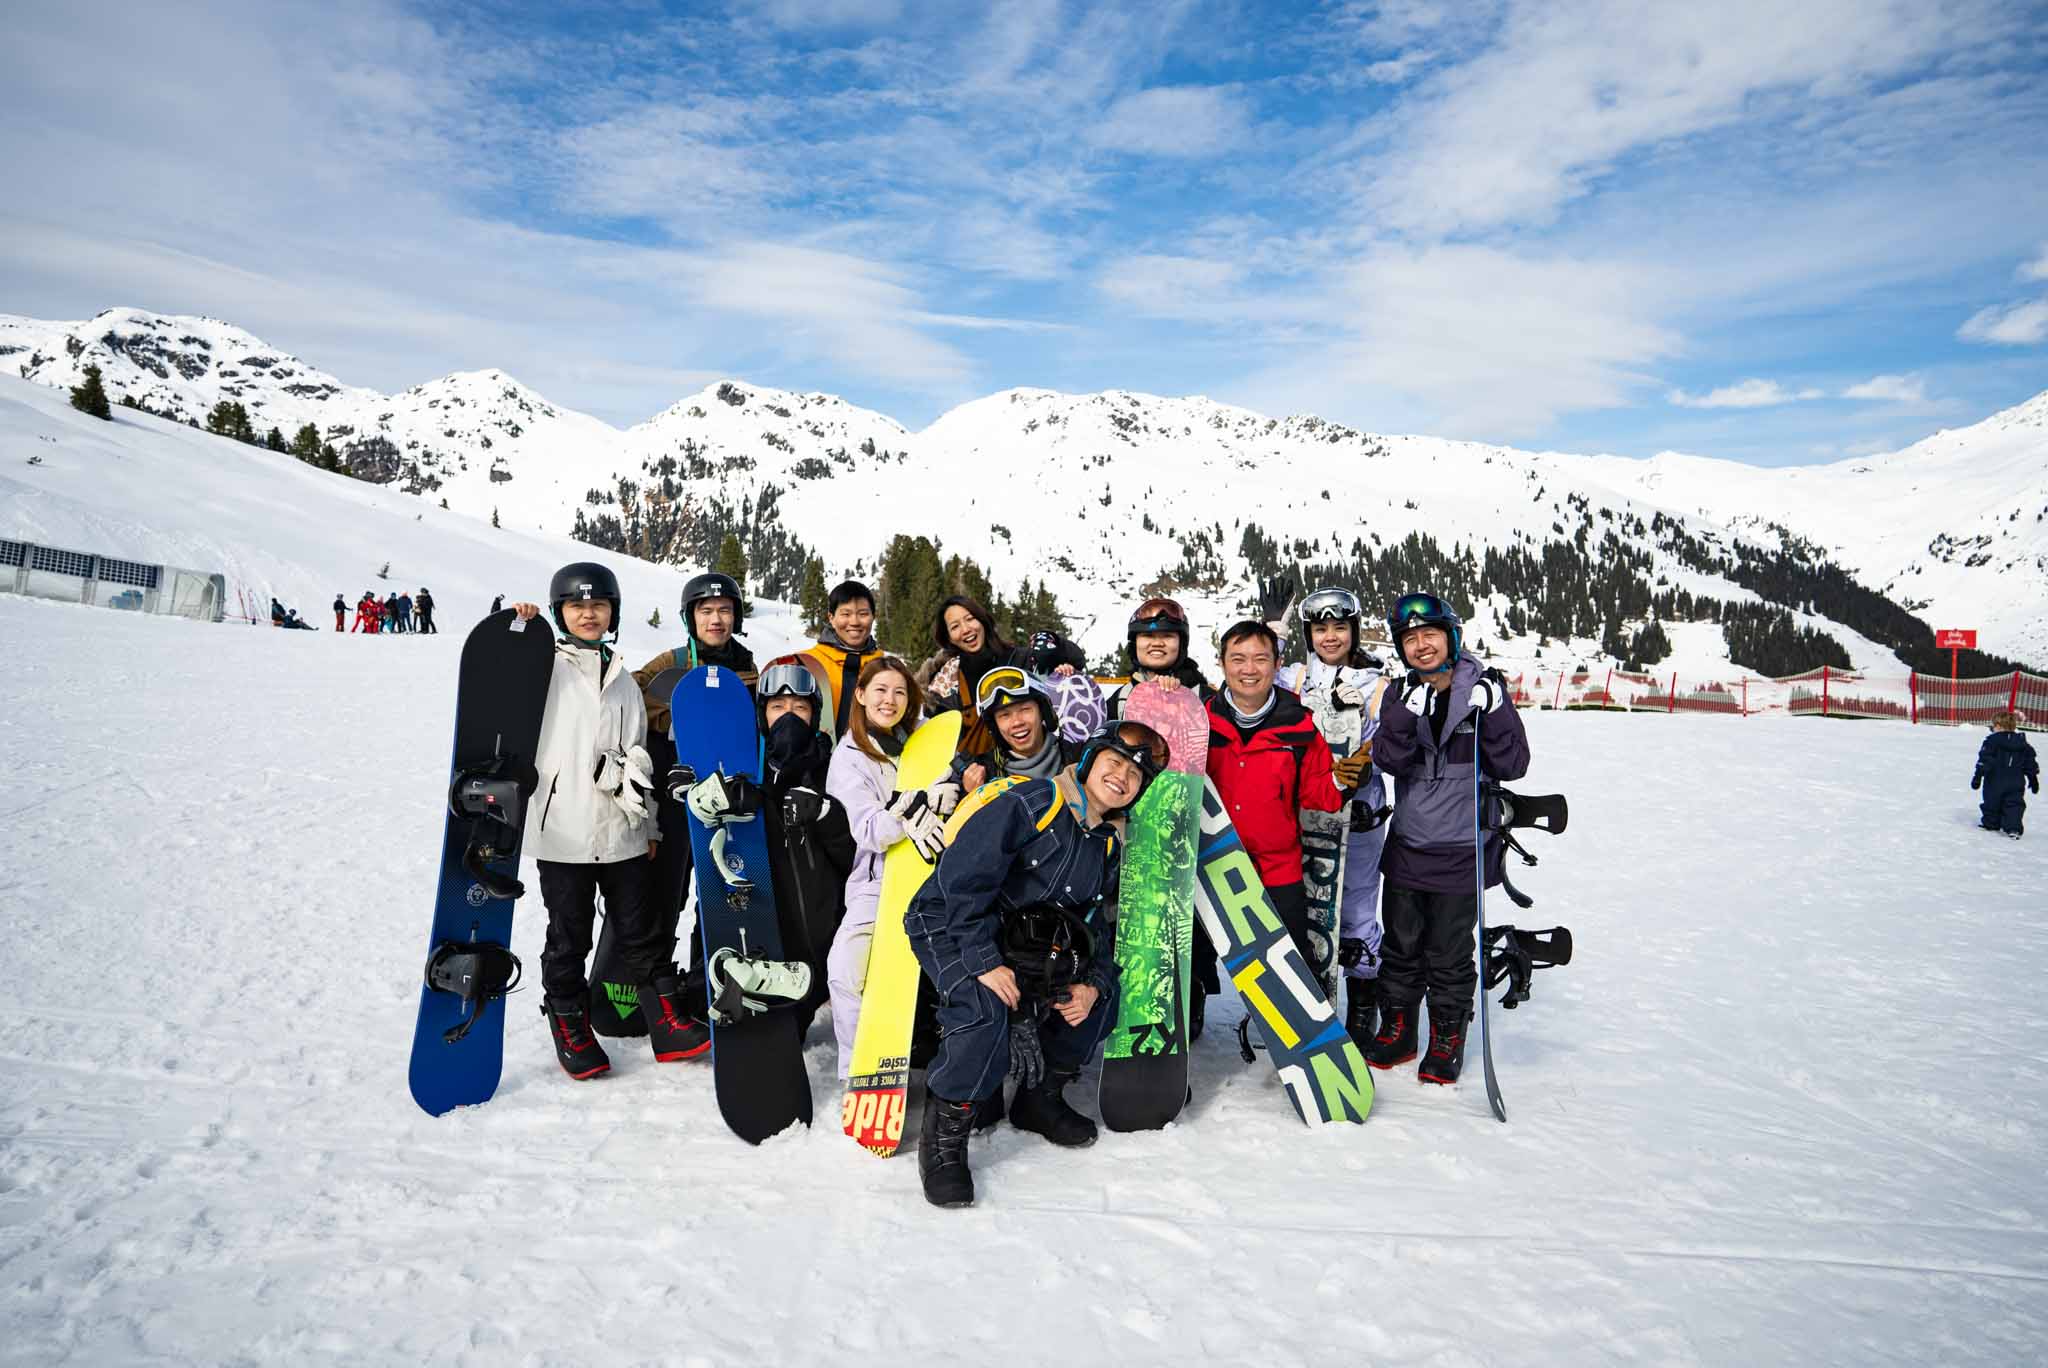 Austria - Snowboarding with friends TTI Experiences